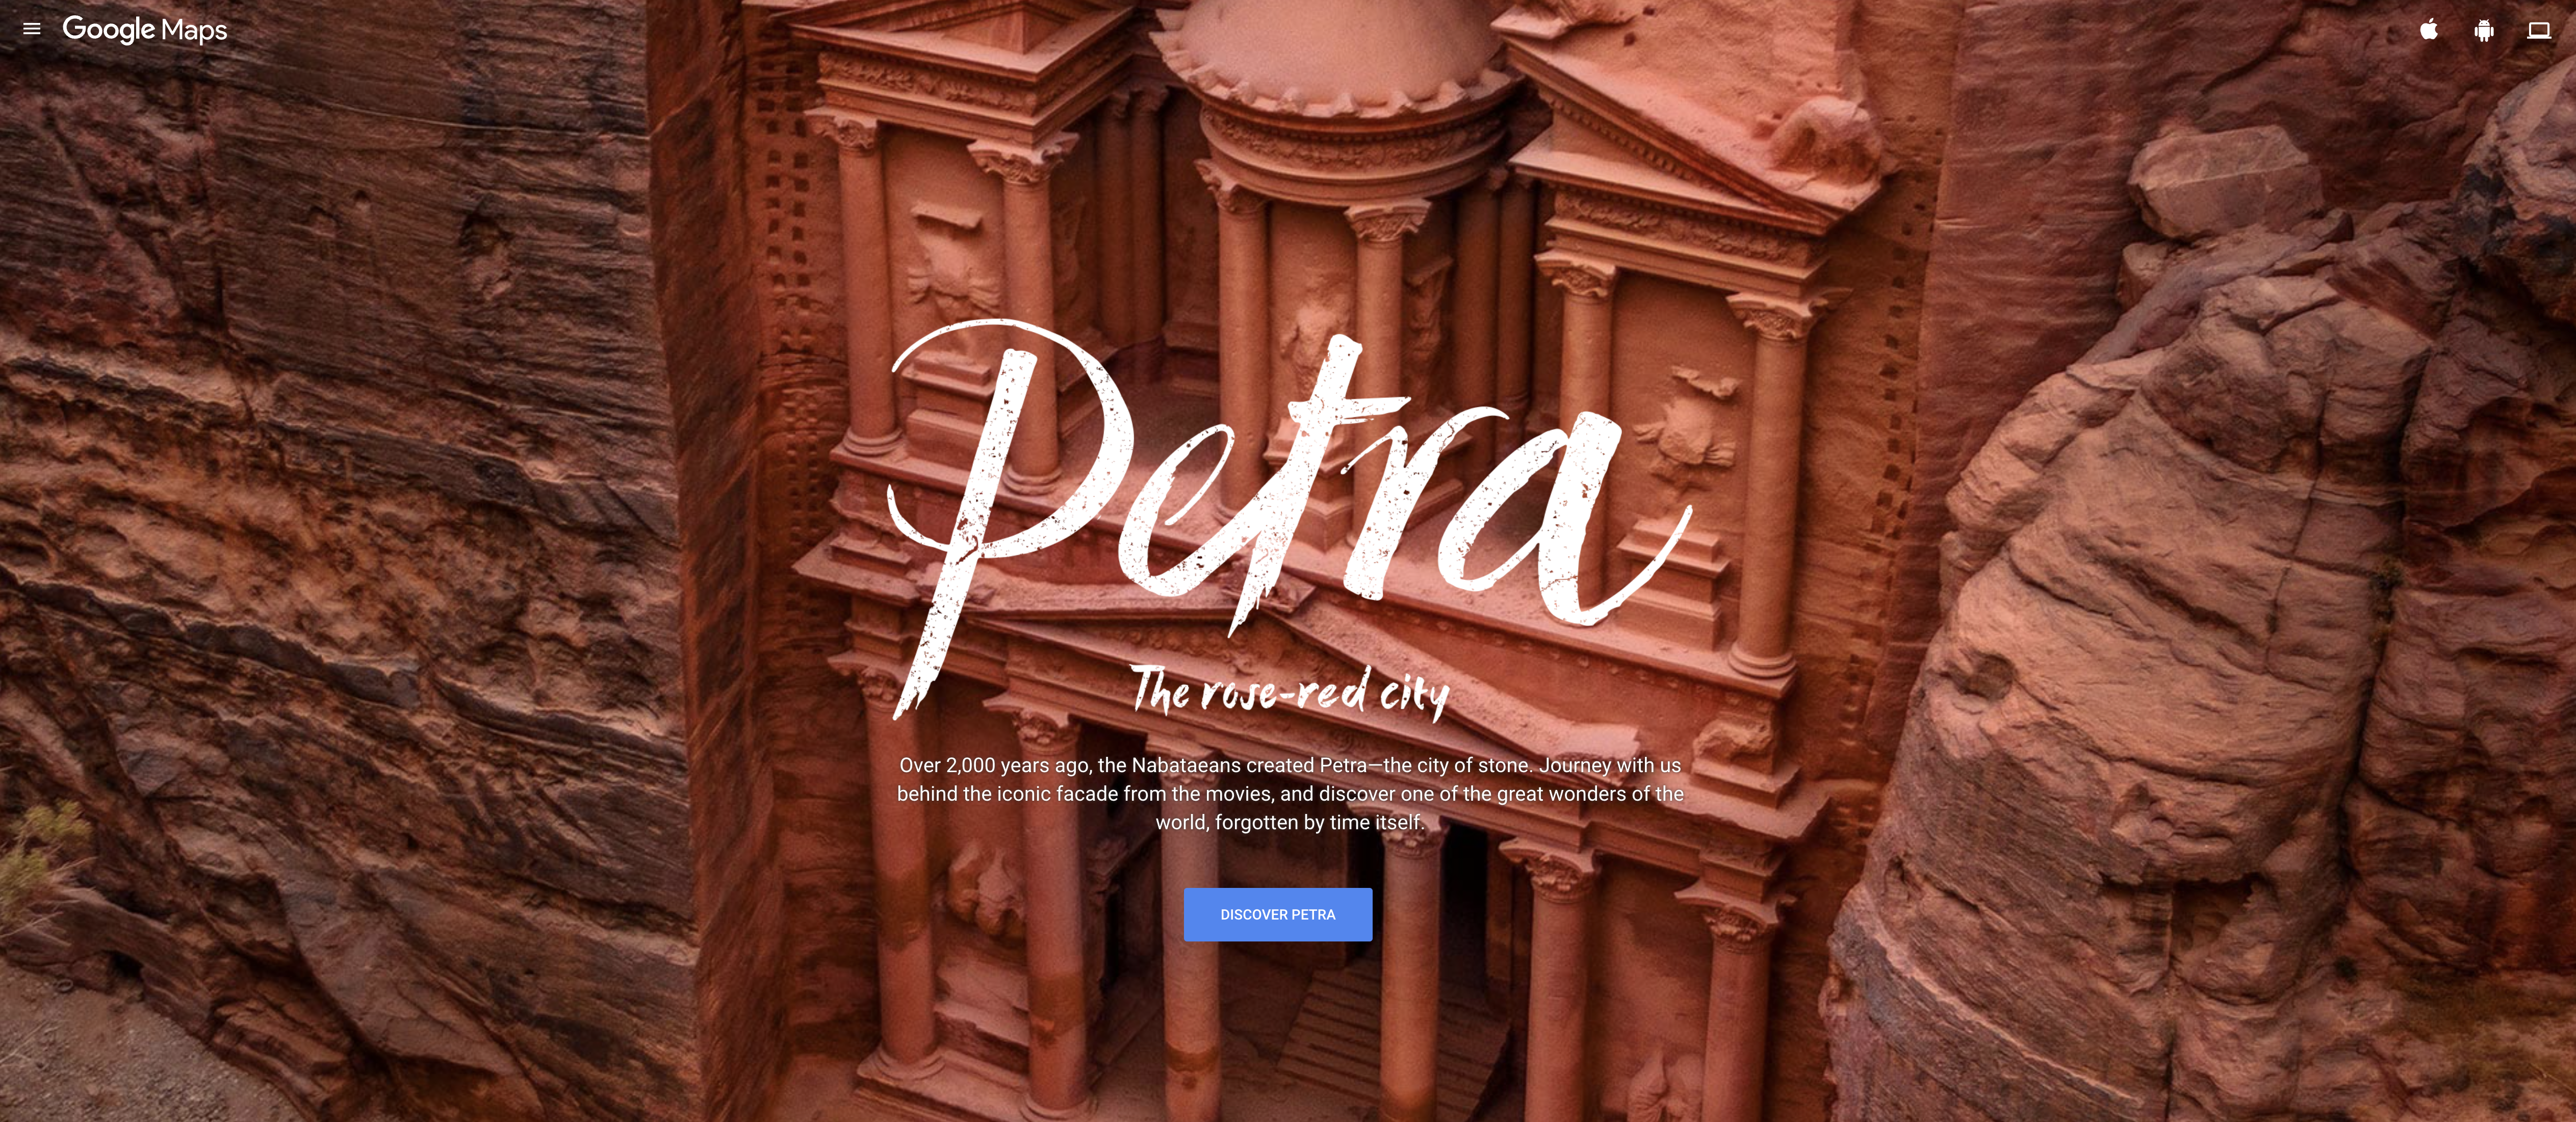 google-street-view-petra